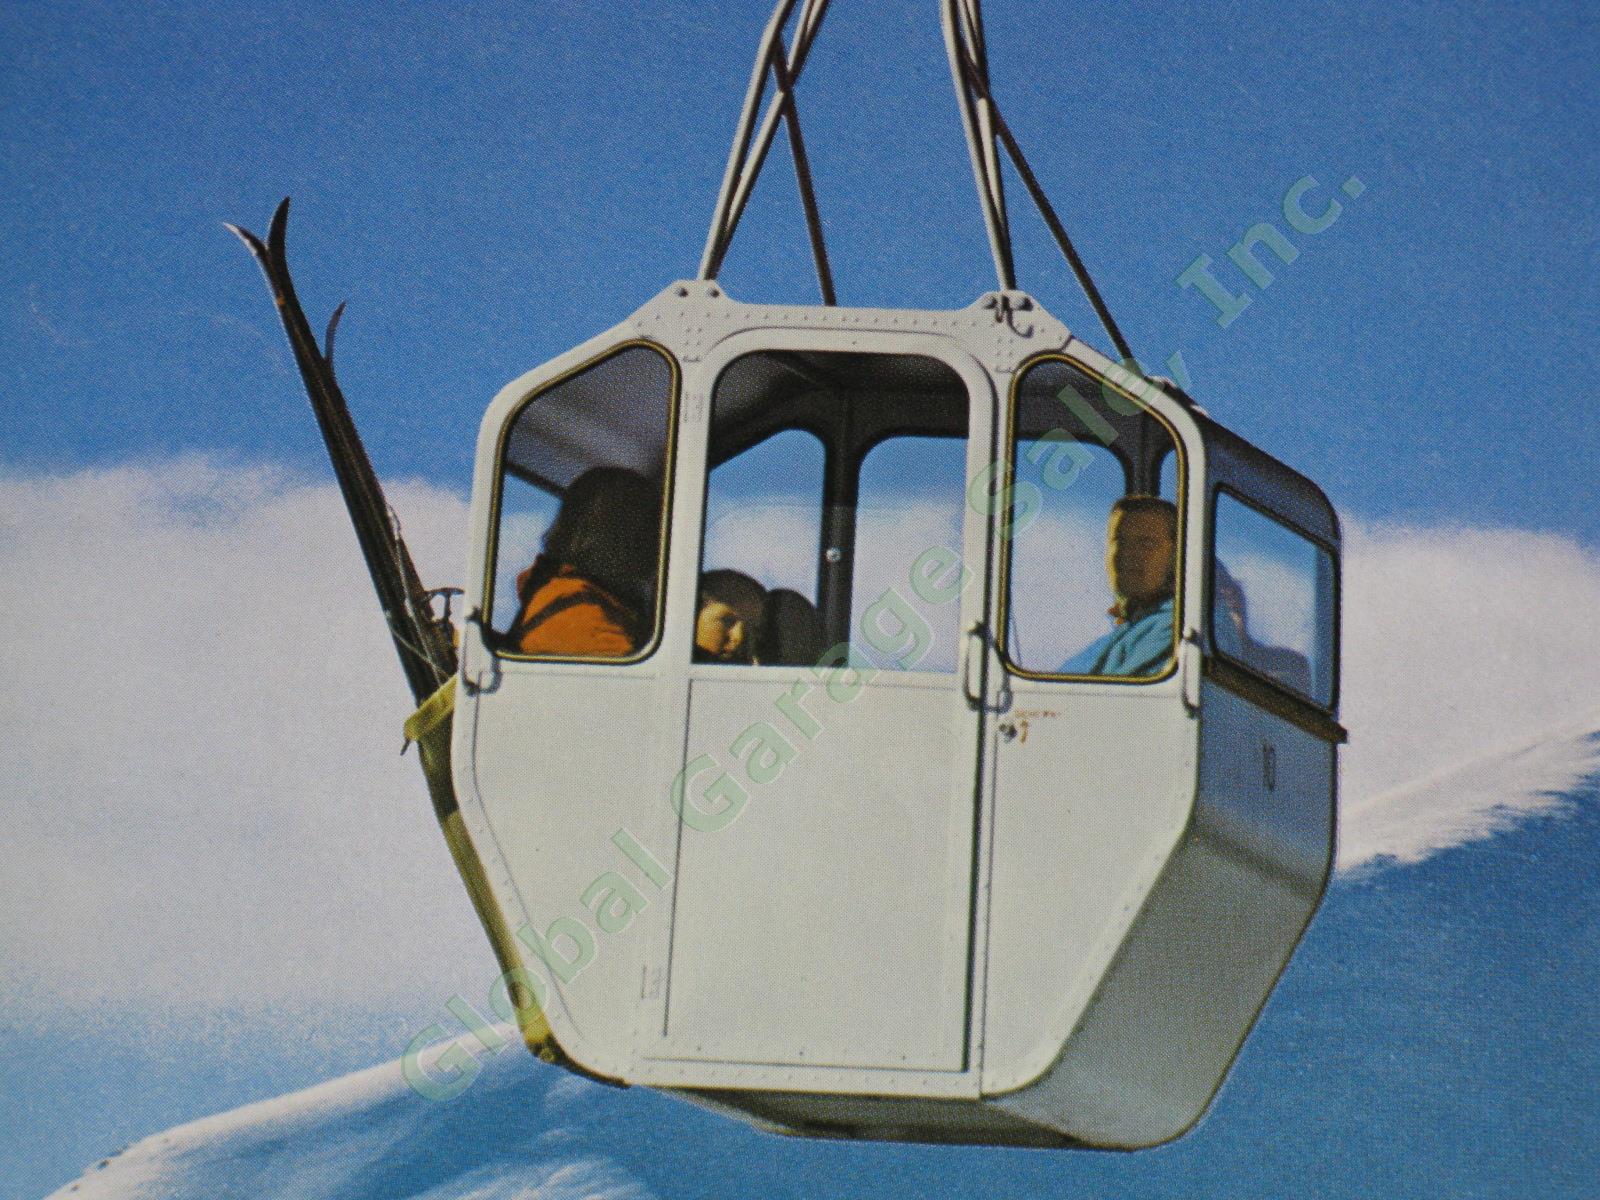 Vtg 1960s Swiss Travel Poster Savognin Ski Resort Chair Lift Grisons Switzerland 2